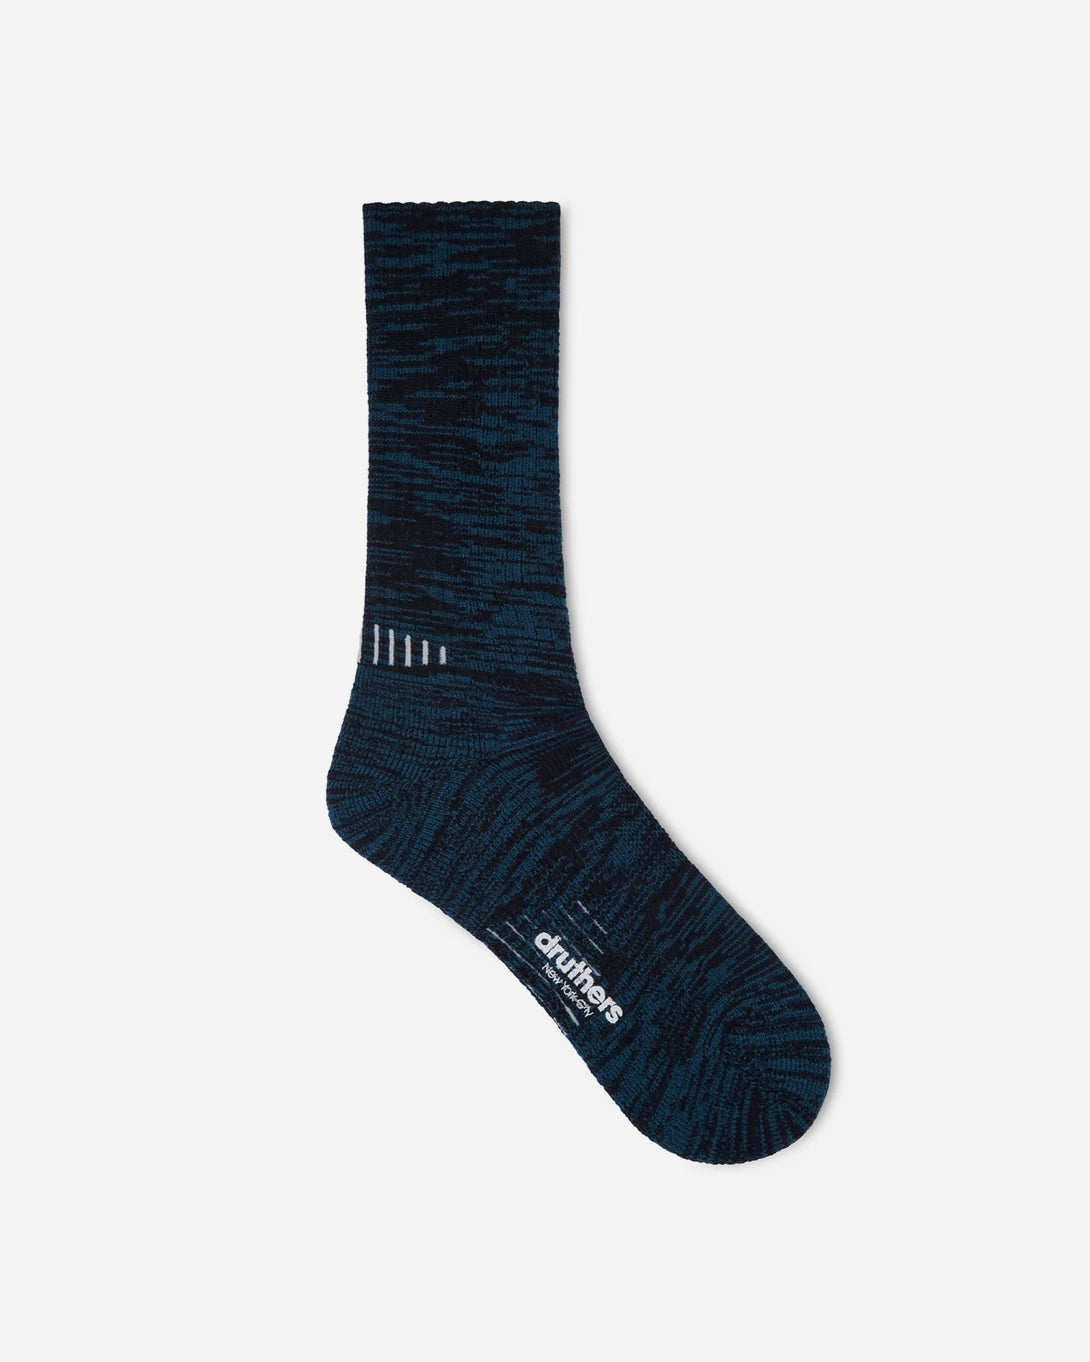 Blue Vivo Merino Wool Function Boot Sock Druthers